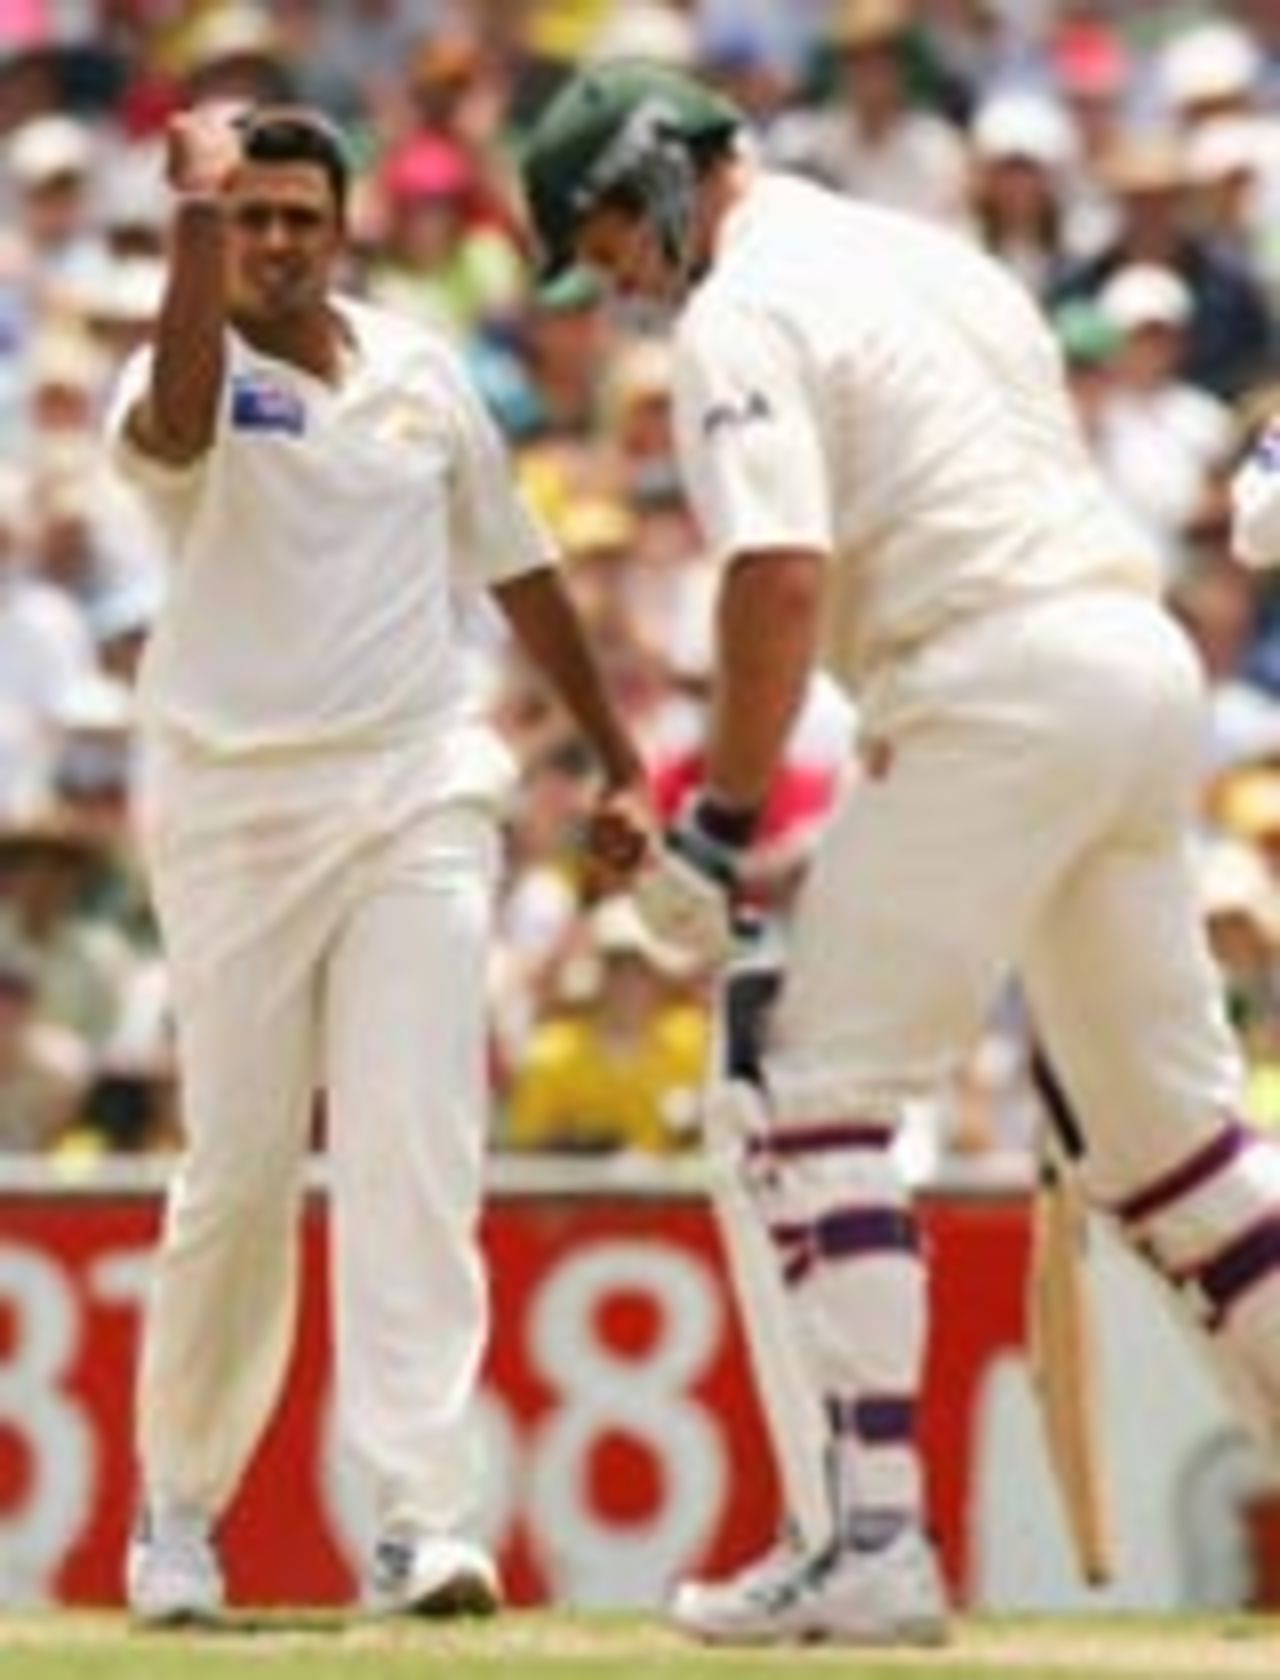 Danish Kaneria celebrates as Matthew Hayden is bowled, Australia v Pakistan, 3rd Test, Sydney, January 3, 2005